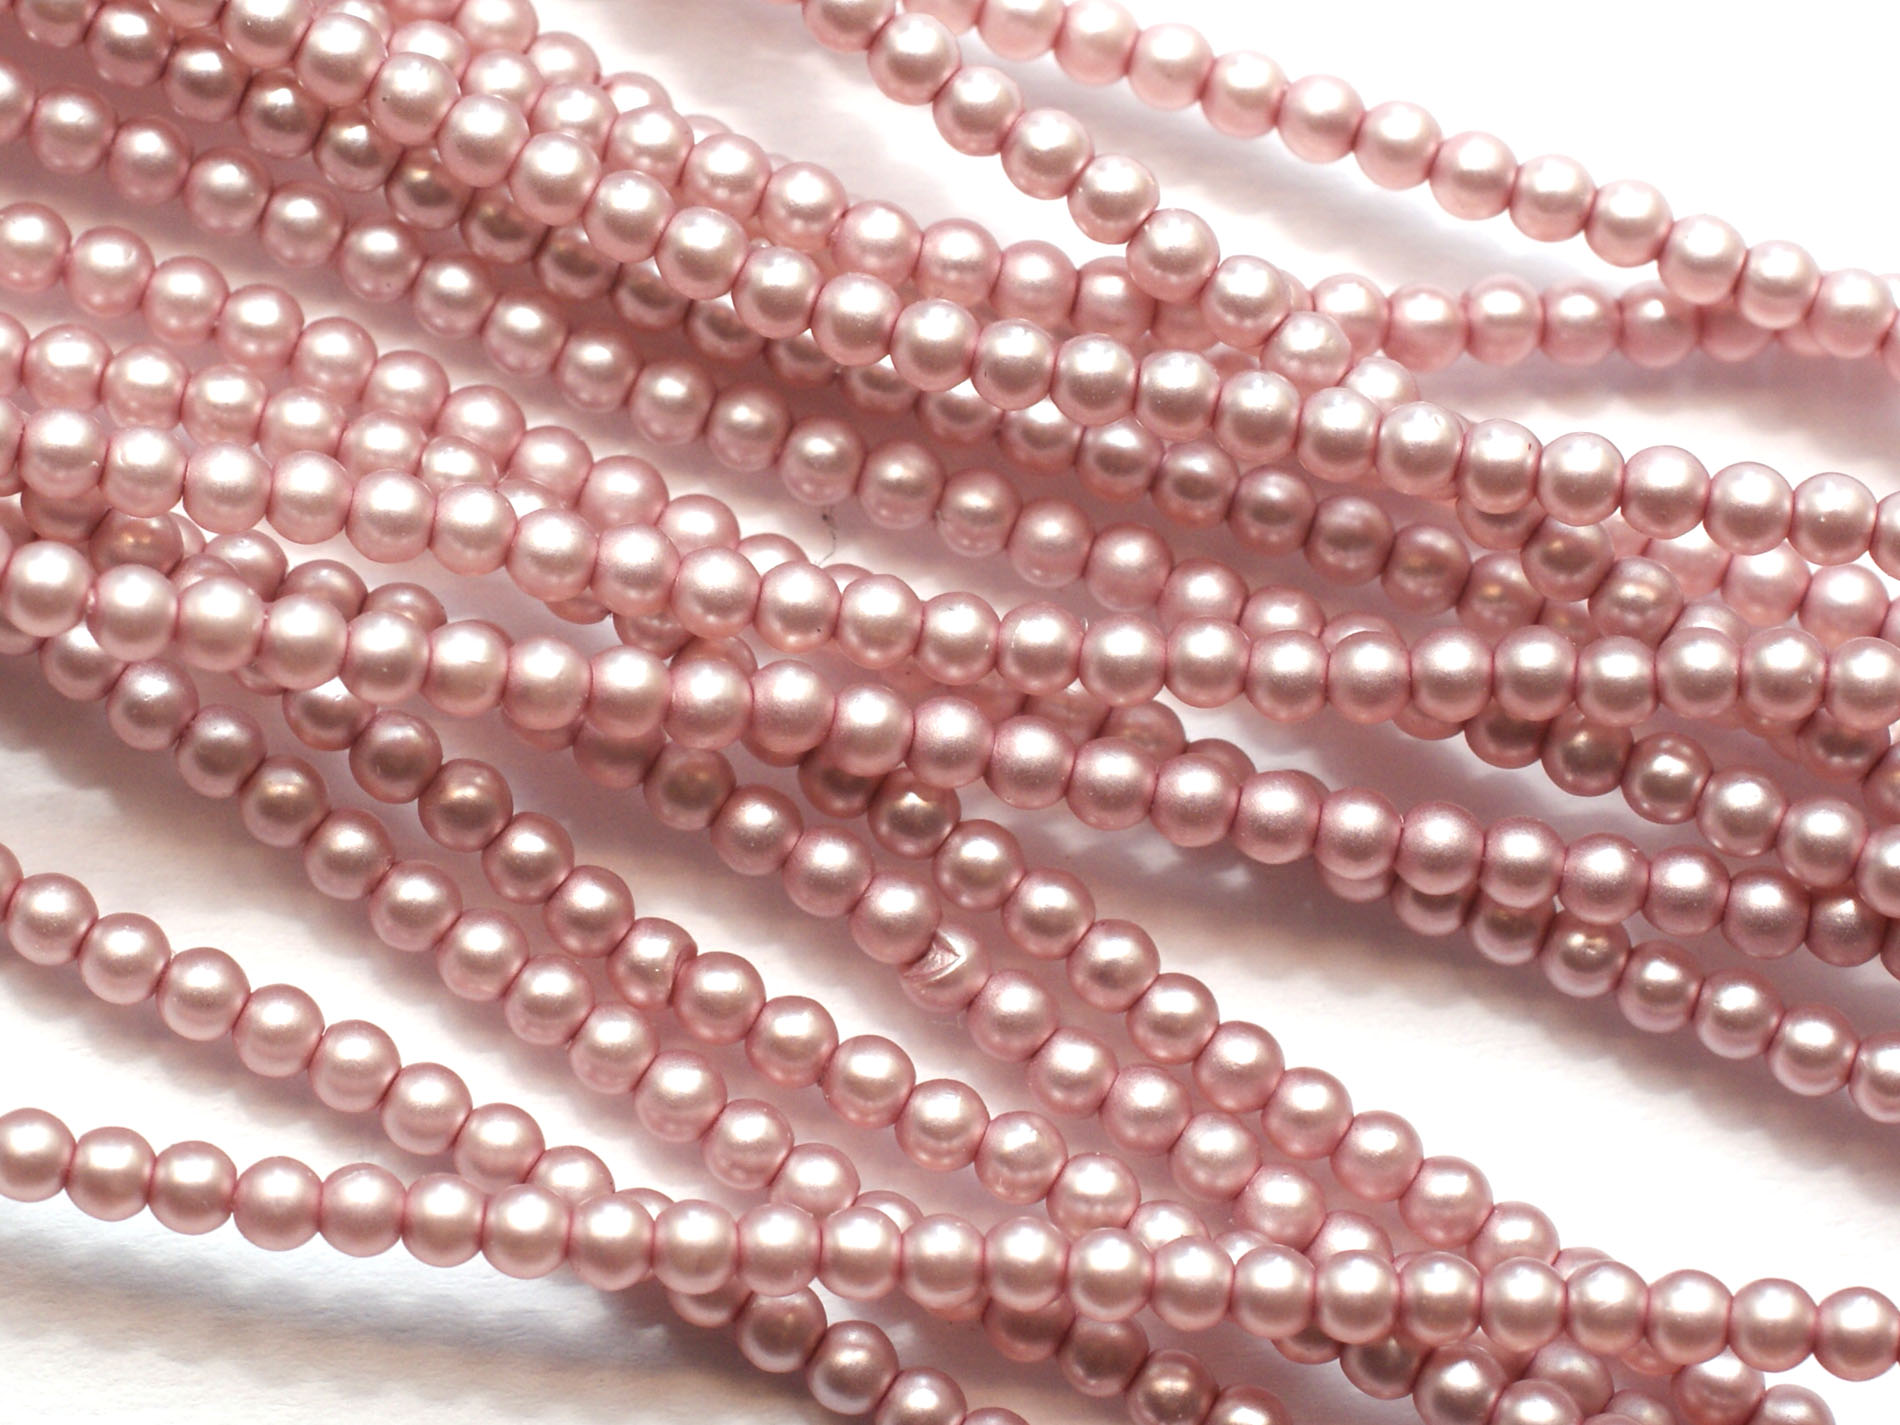 150 st 2 mm runda glaspärlor i pärlemor, Matte Antique Pink Sati